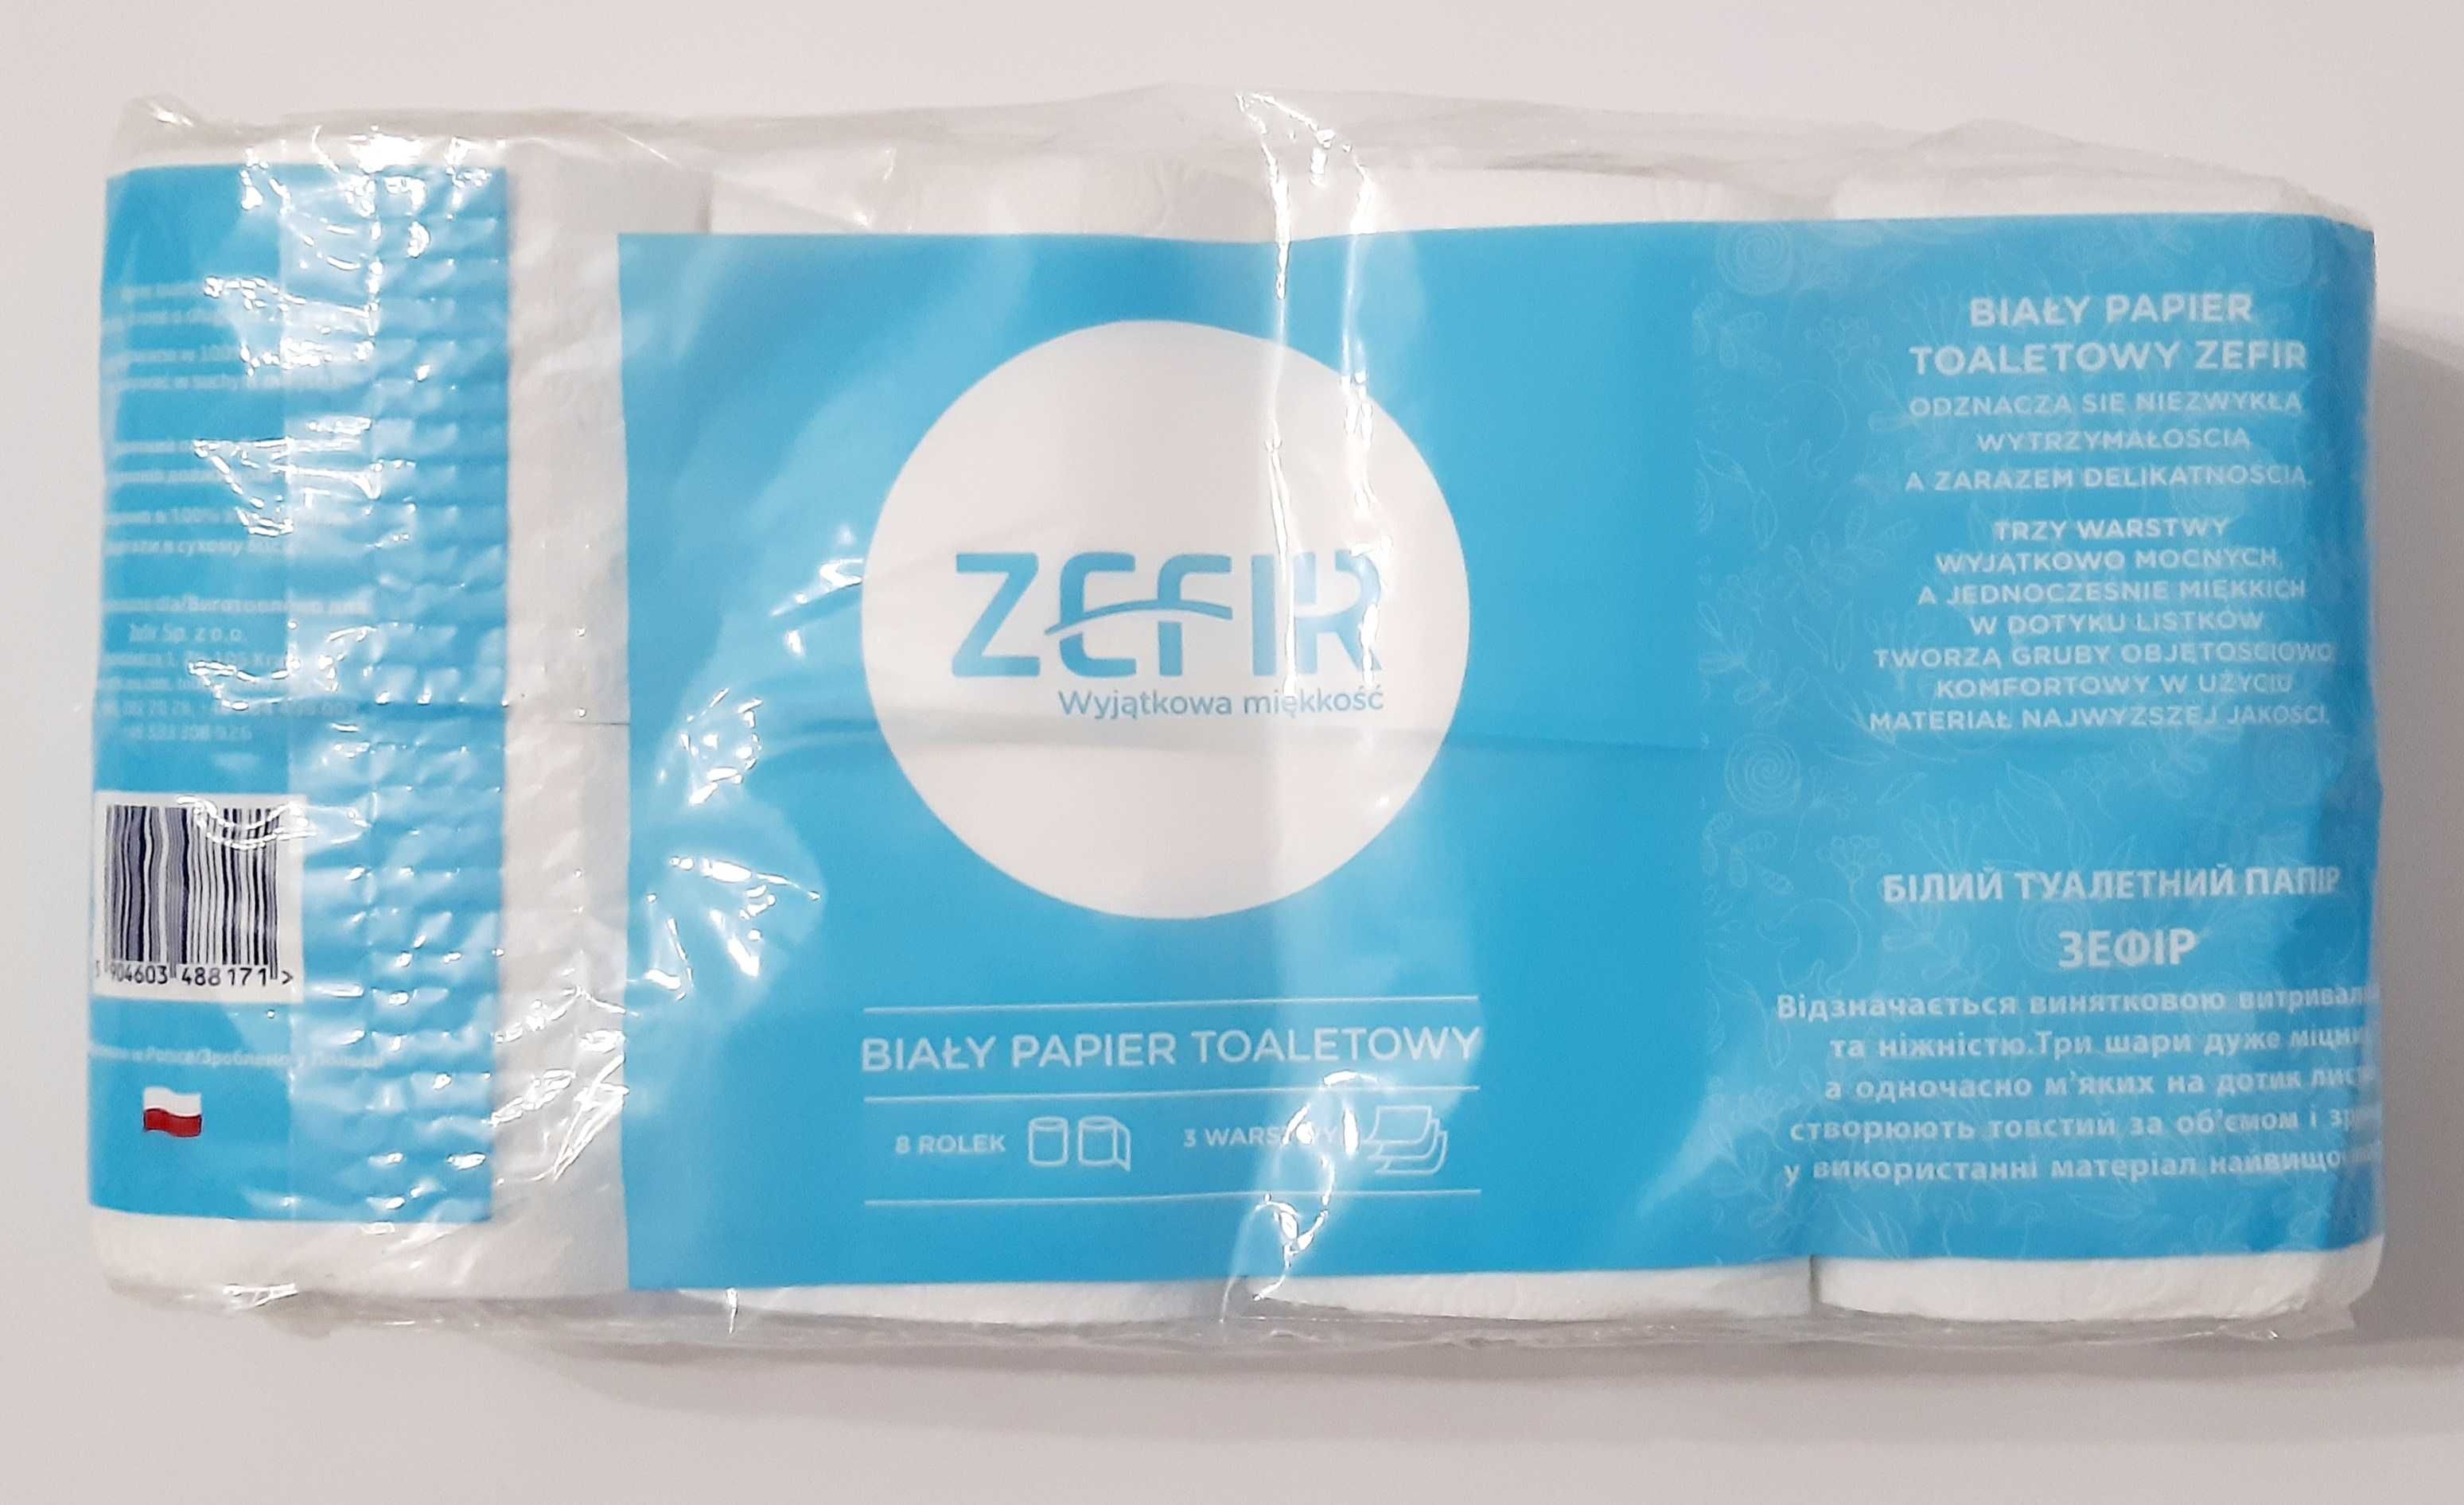 Papier toaletowy Zefir 8 rolek 3 warstwy paleta